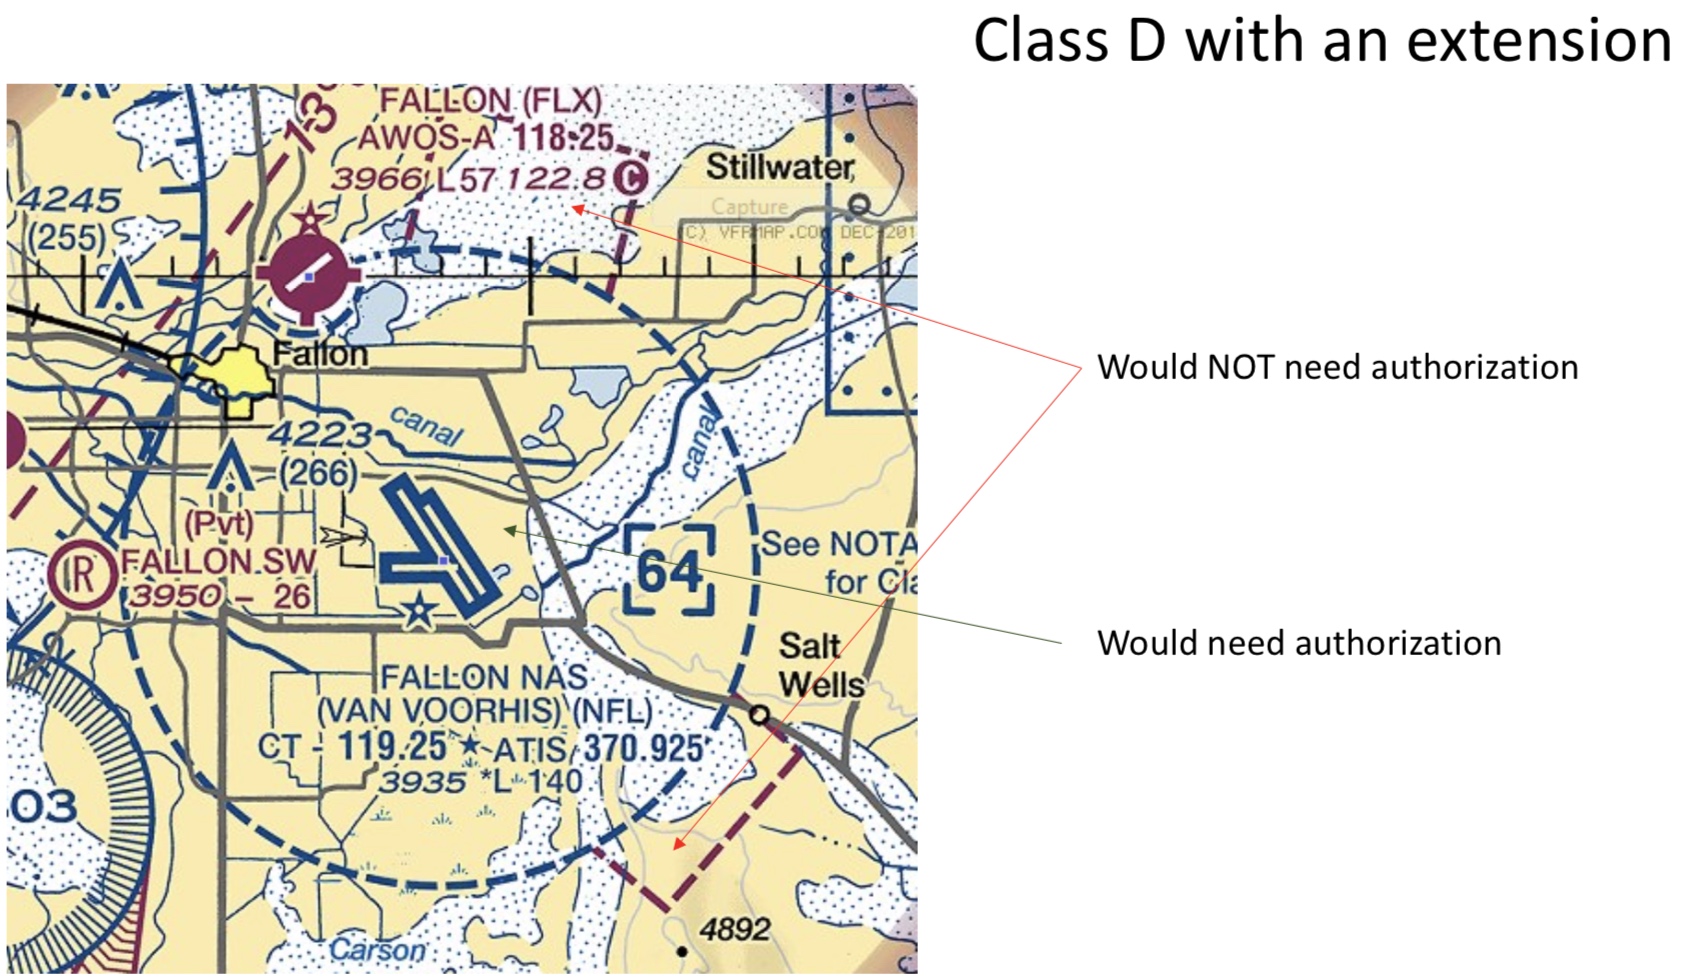 Class D with Class E extension